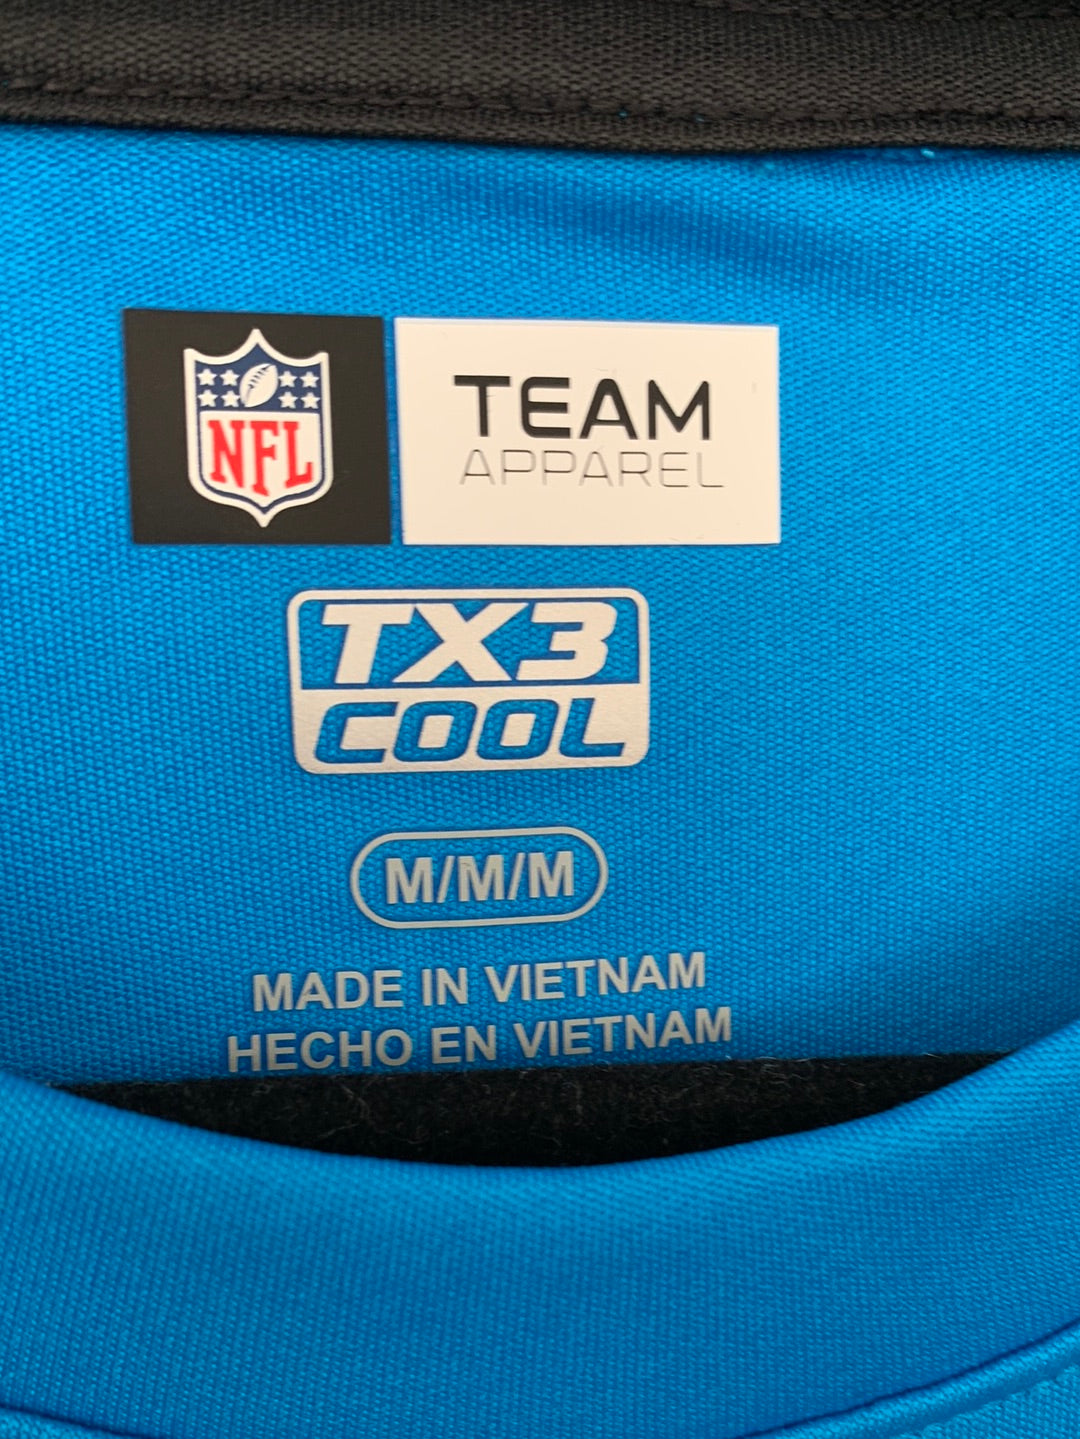 NWT - TEAM APPAREL Blue NFL NC Panthers Football TX3 Cool Shirt - M